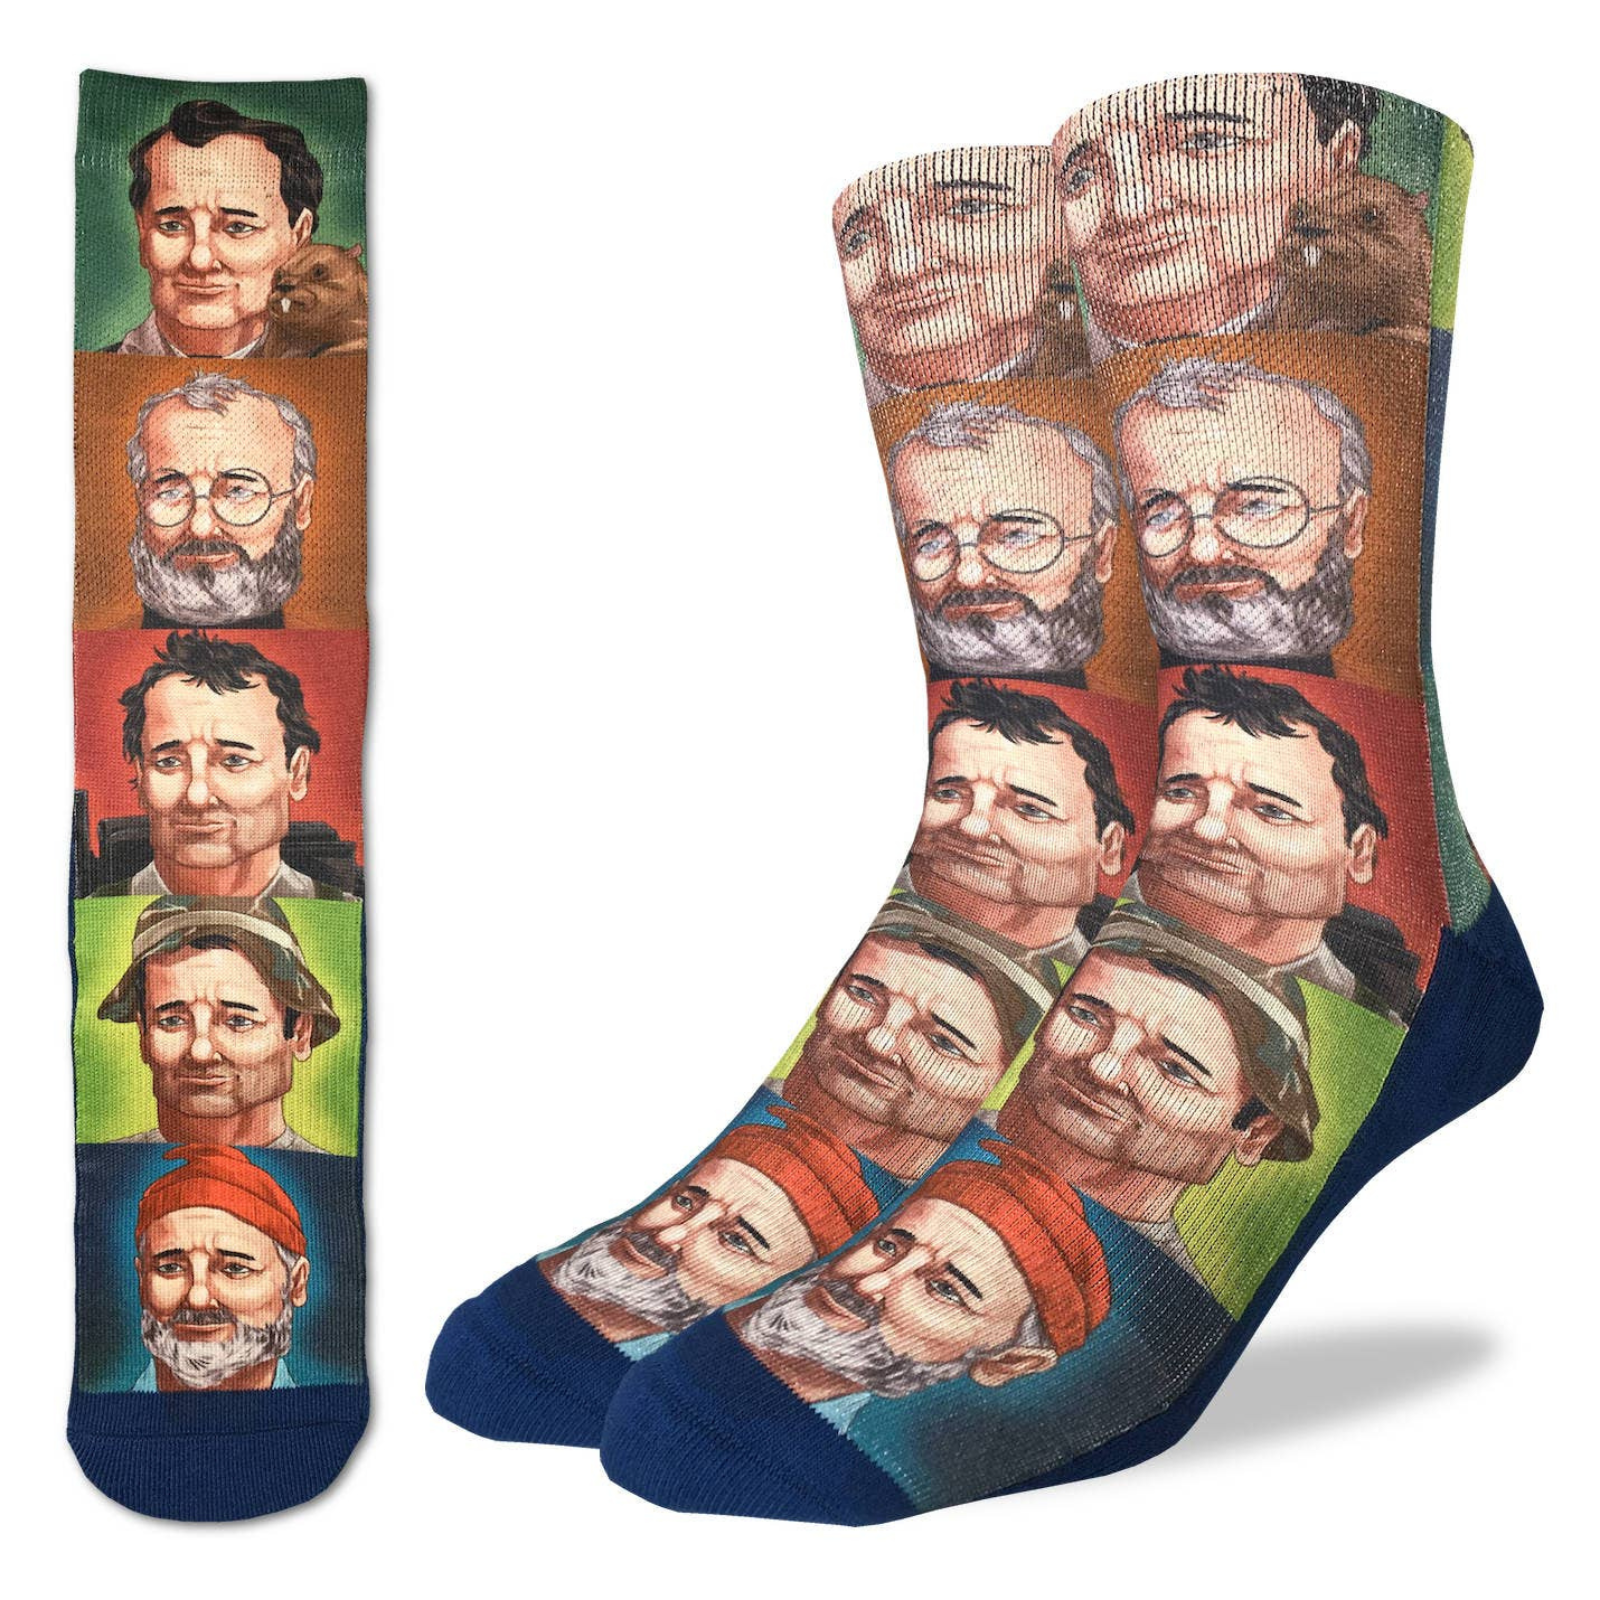 Good Luck Sock Bill Murray men's sock featuring Bill Murray from various acting roles